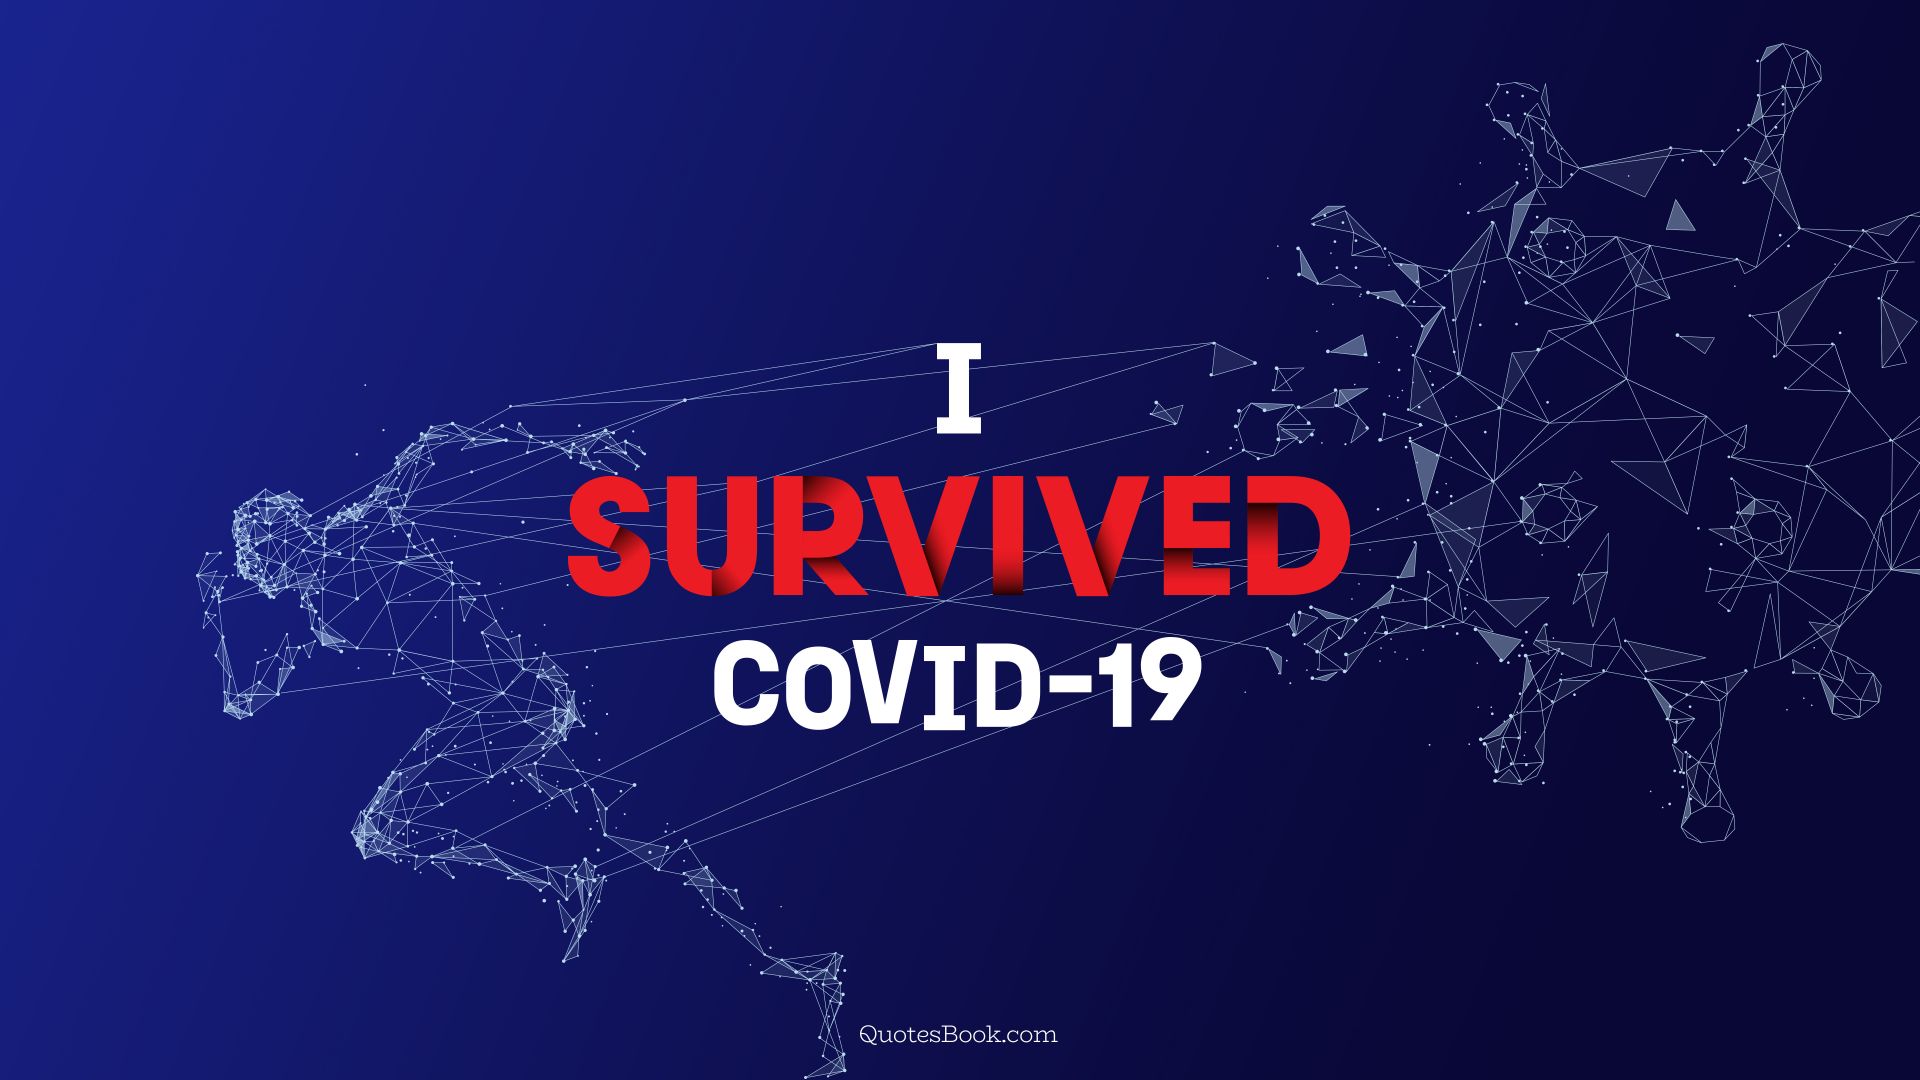 I survived COVID-19